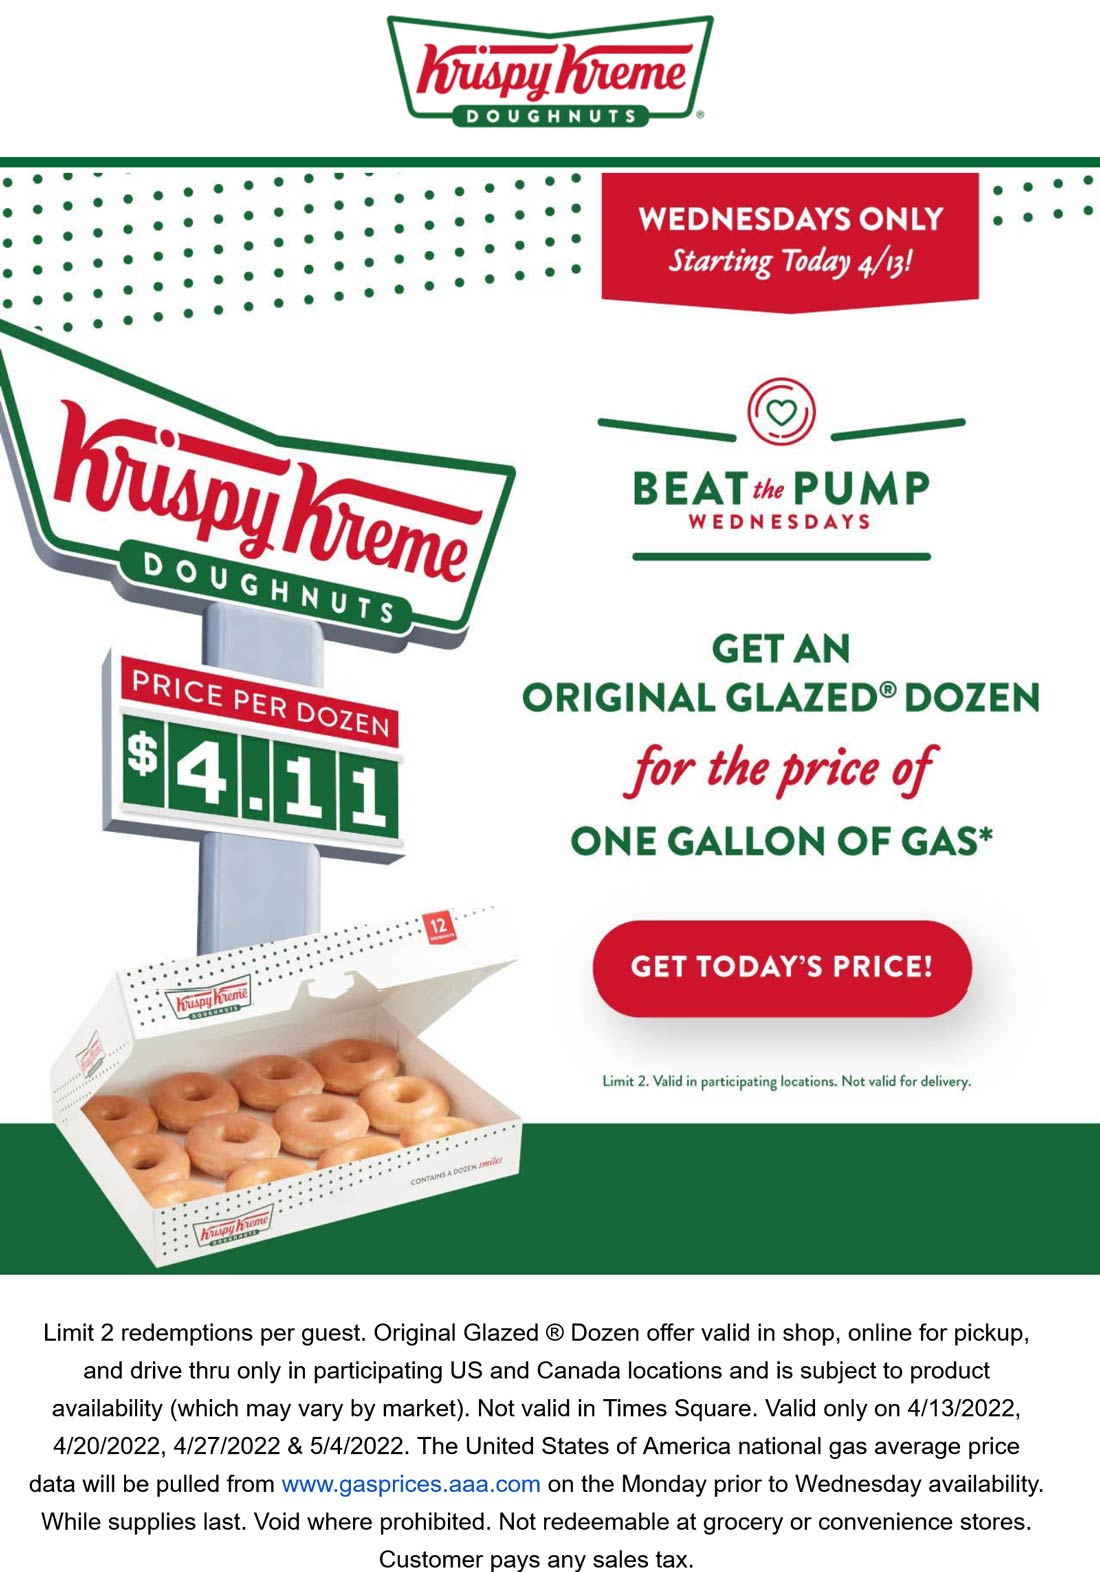 Krispy Kreme restaurants Coupon  $4.11 dozen doughnuts Wednesdays at Krispy Kreme #krispykreme 